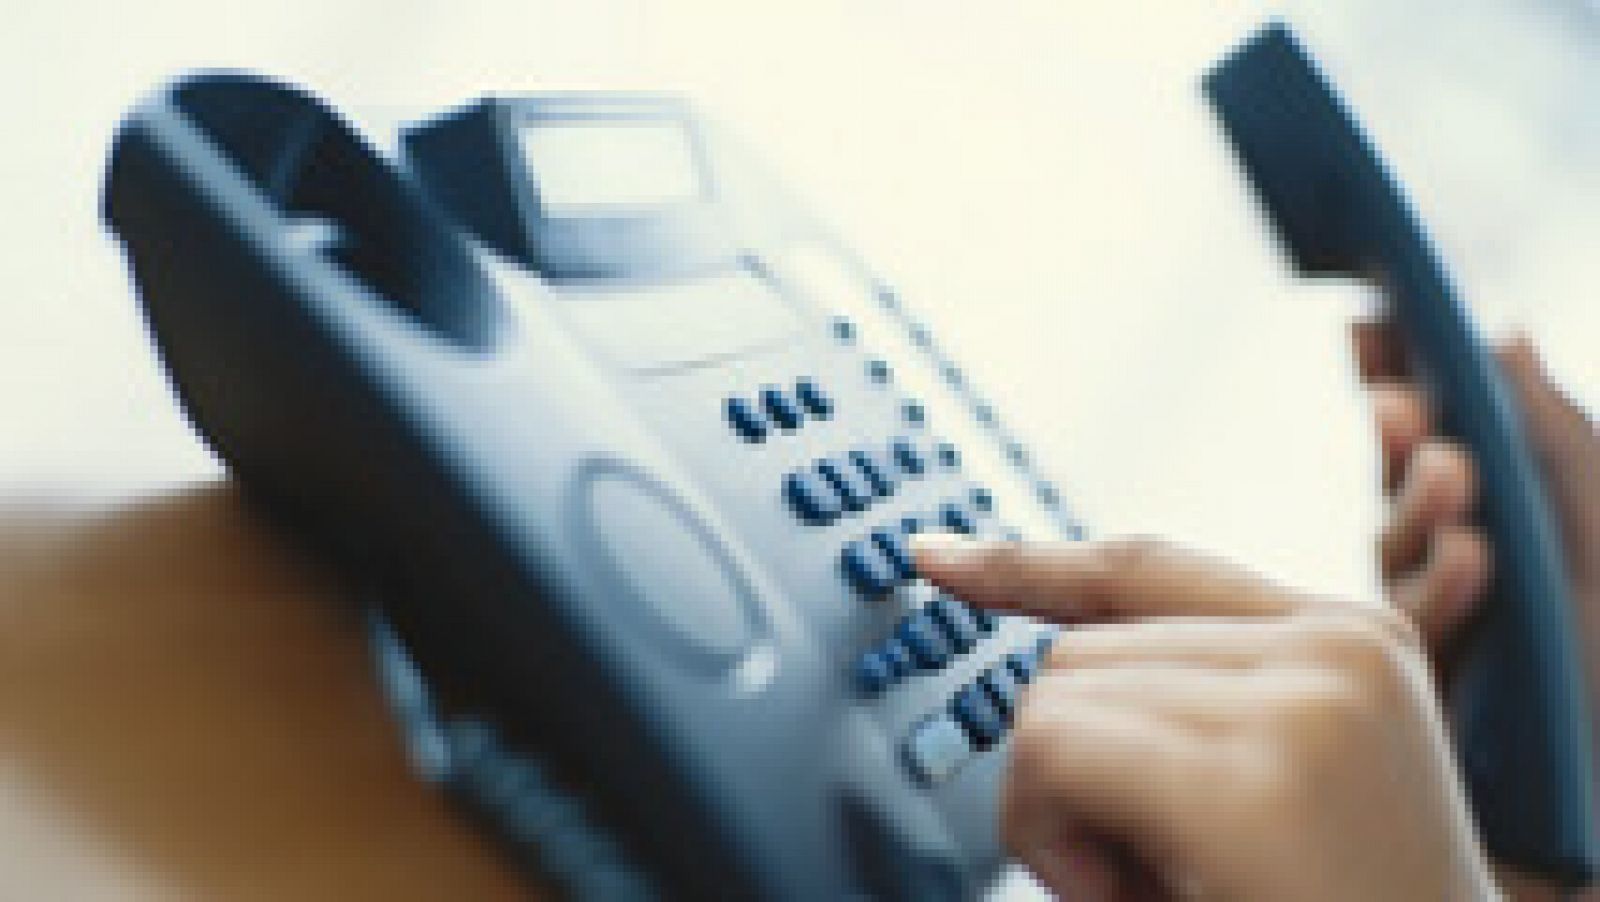 Telediario 1: Los números de teléfono fijos en España se agotan | RTVE Play